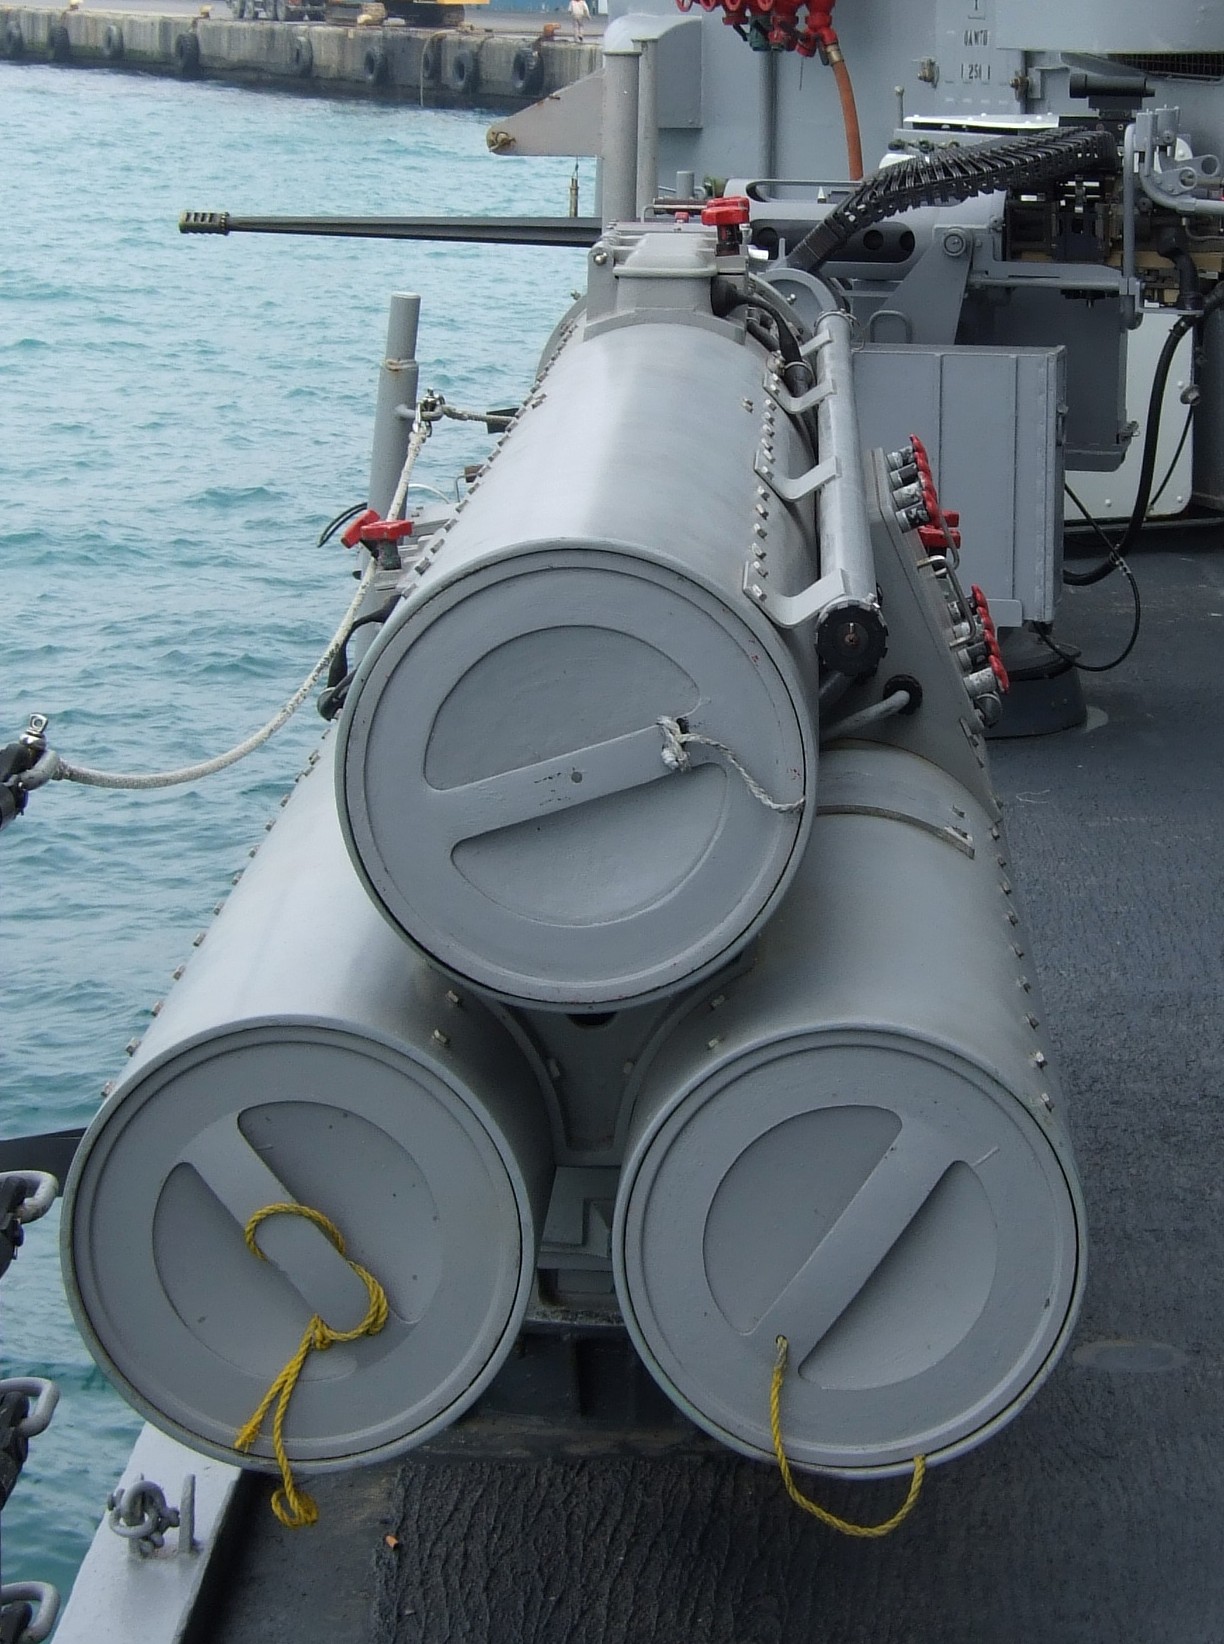 mk-32 torpedo tubes svtt 65 oliver hazard perry class frigate ffg